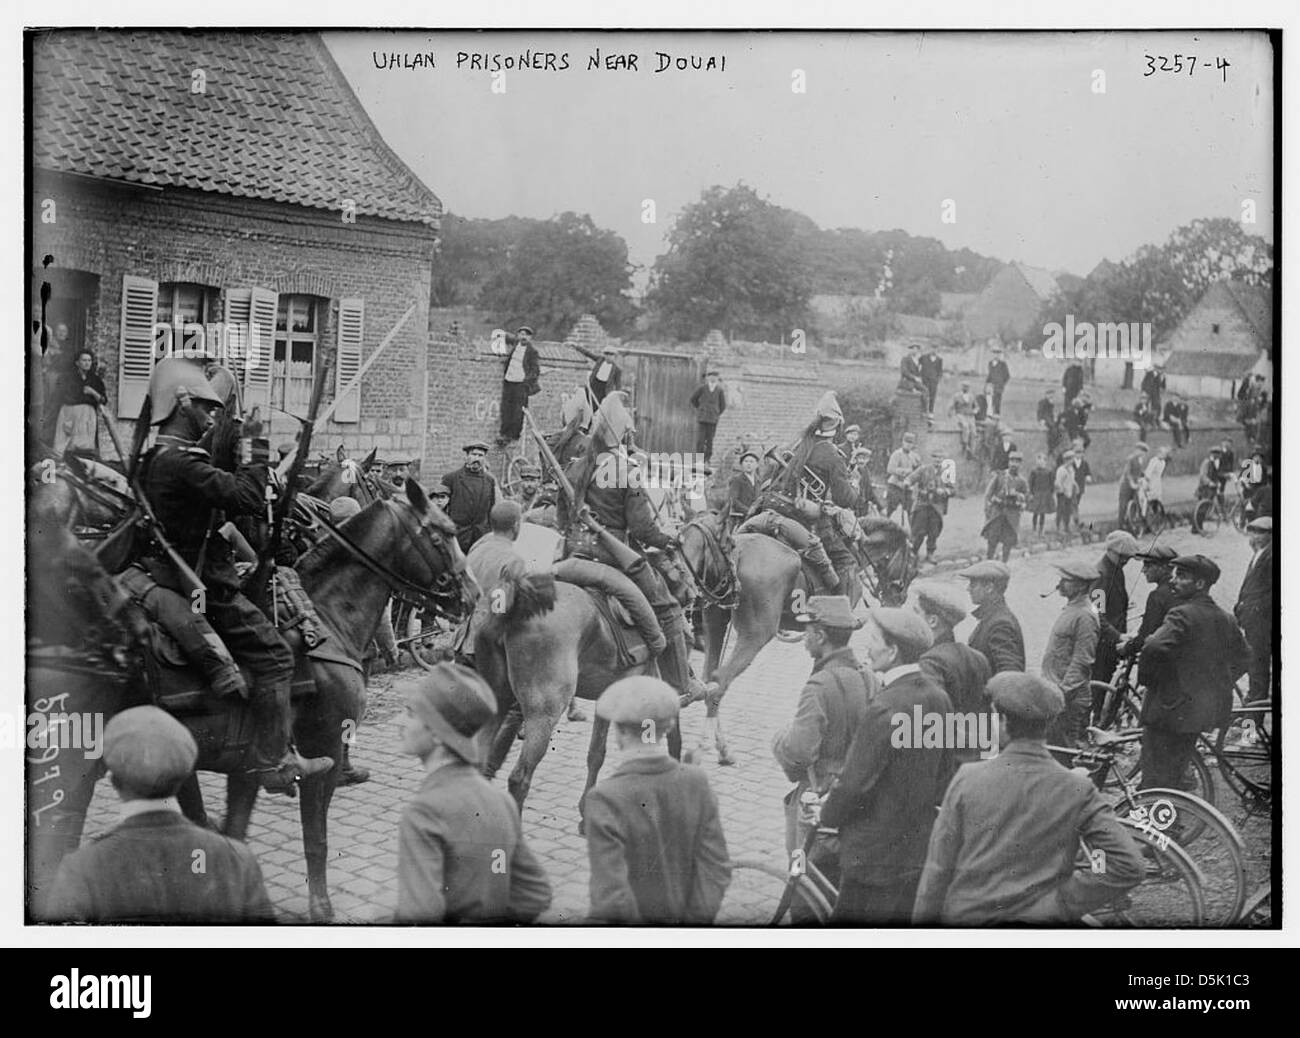 Uhlan prisoners near Douai (LOC) Stock Photo